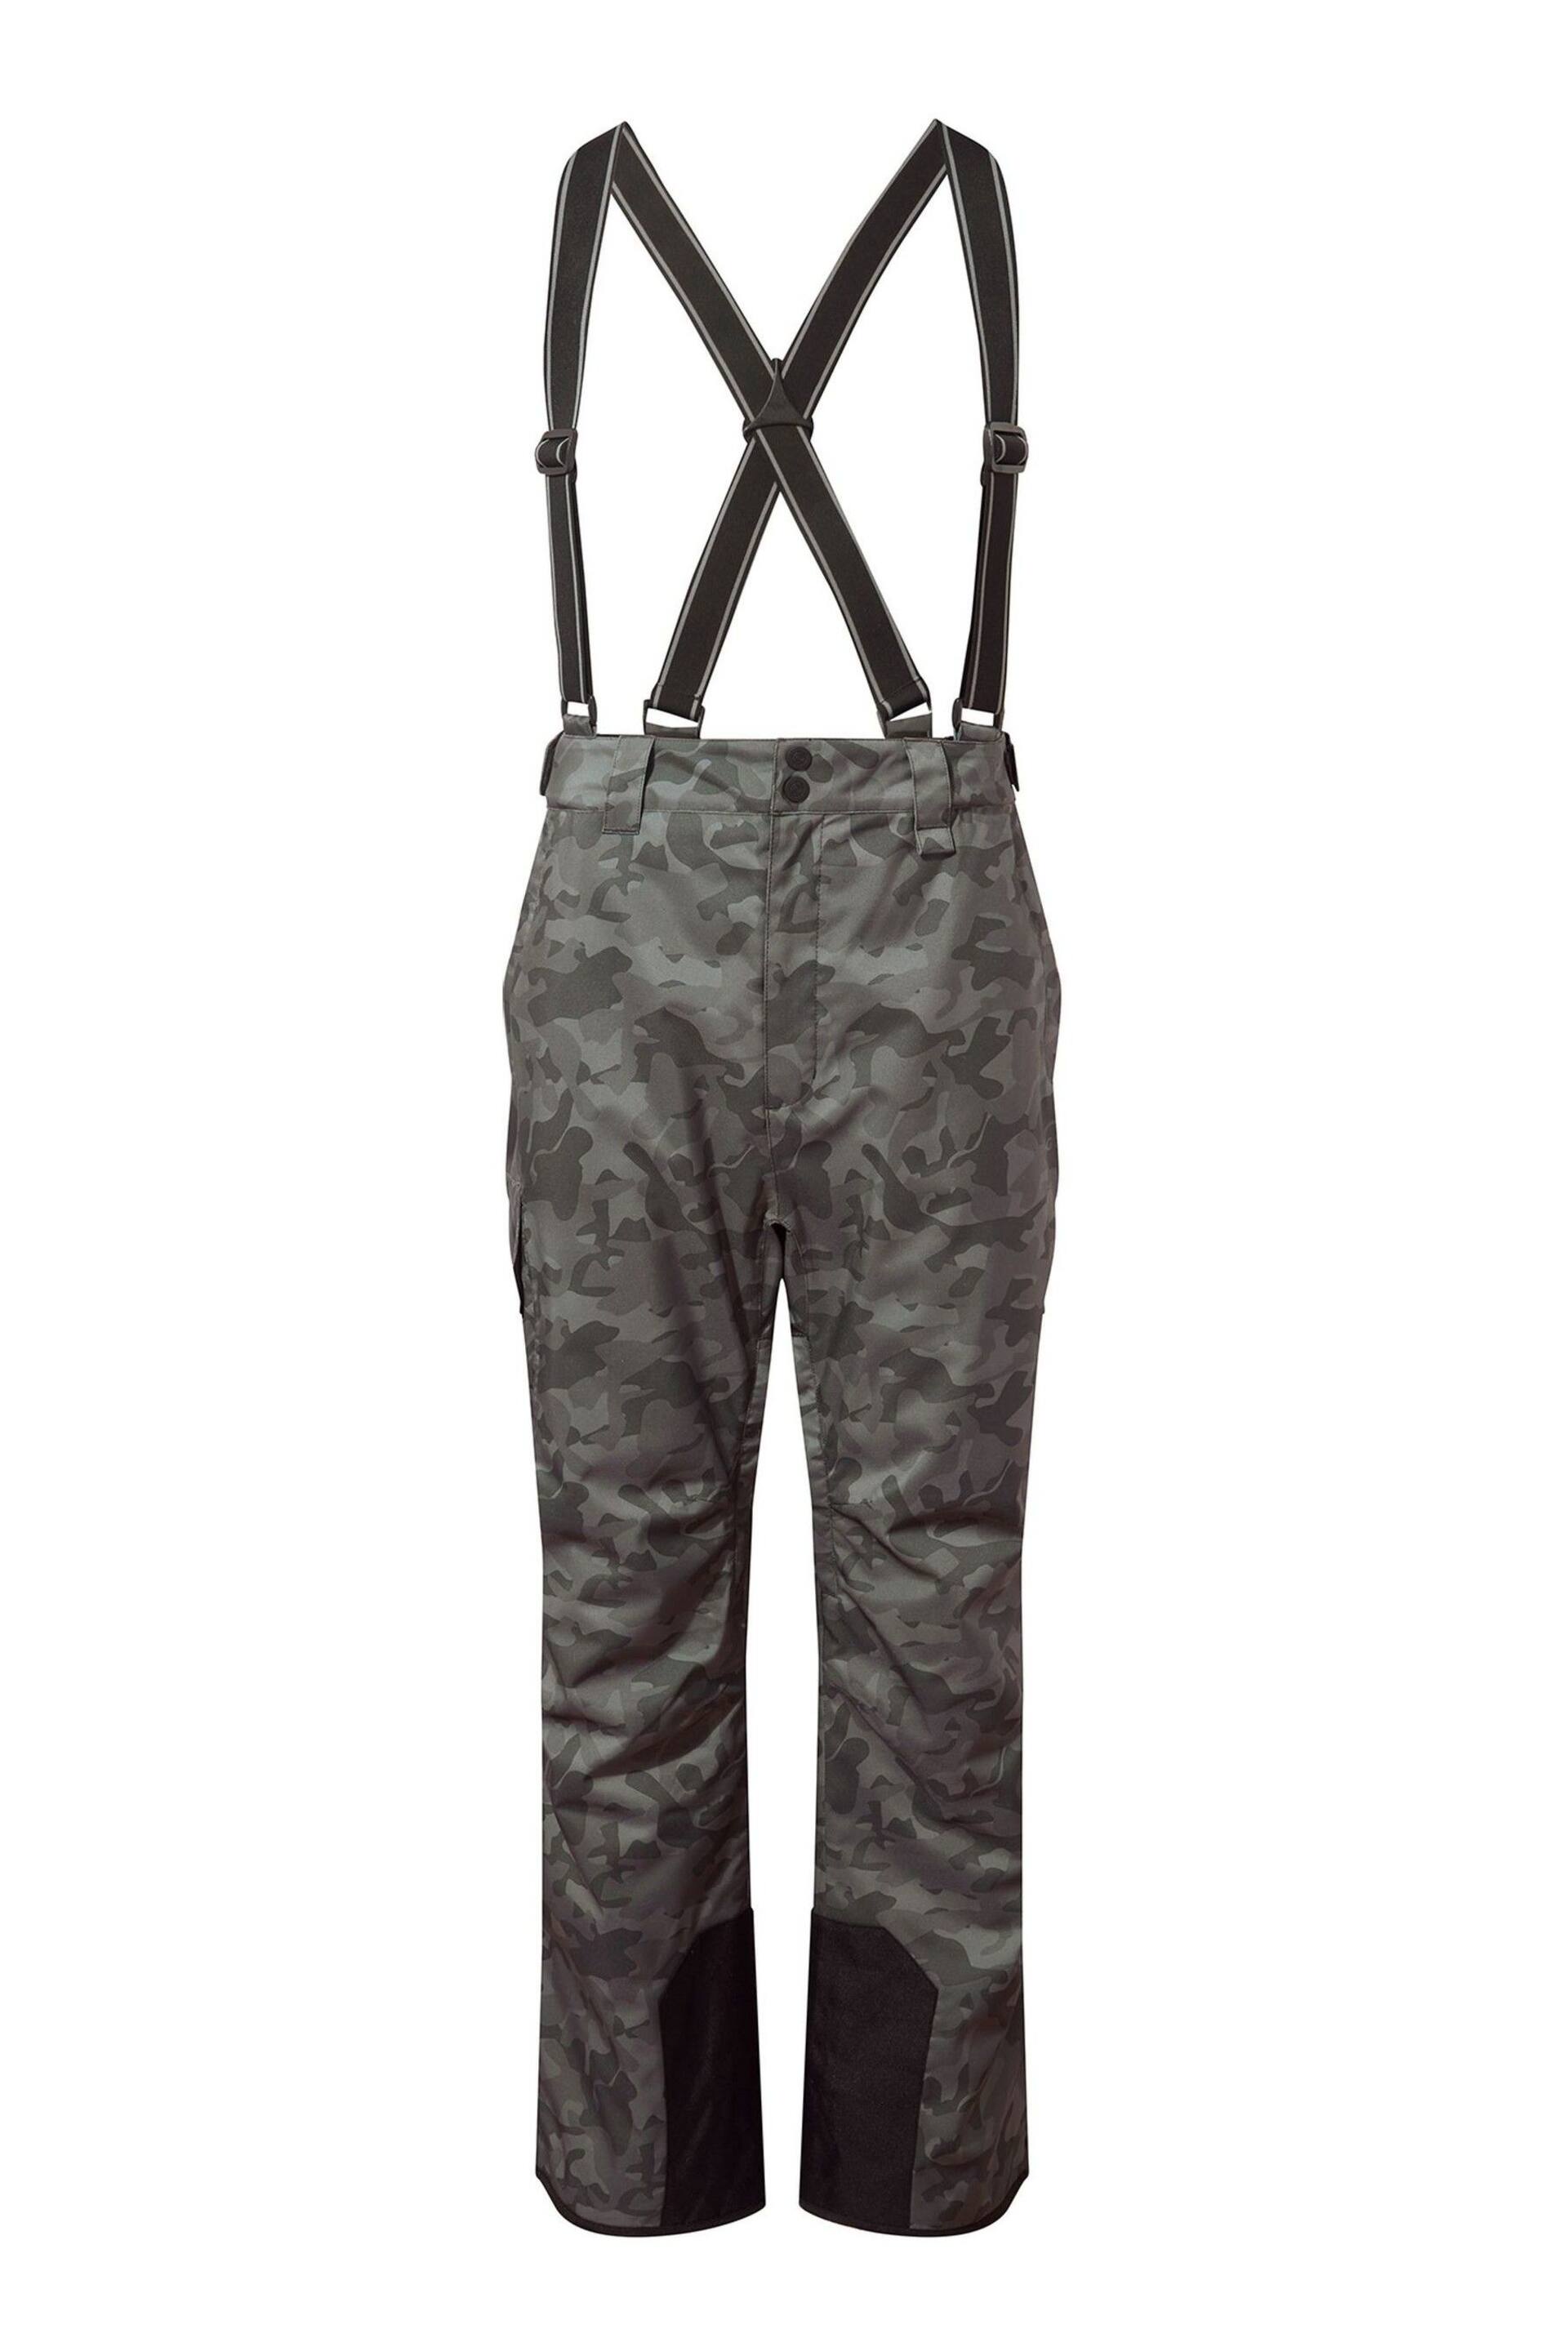 Tog 24 Grey Tempest Ski Salopettes Trousers - Image 7 of 9